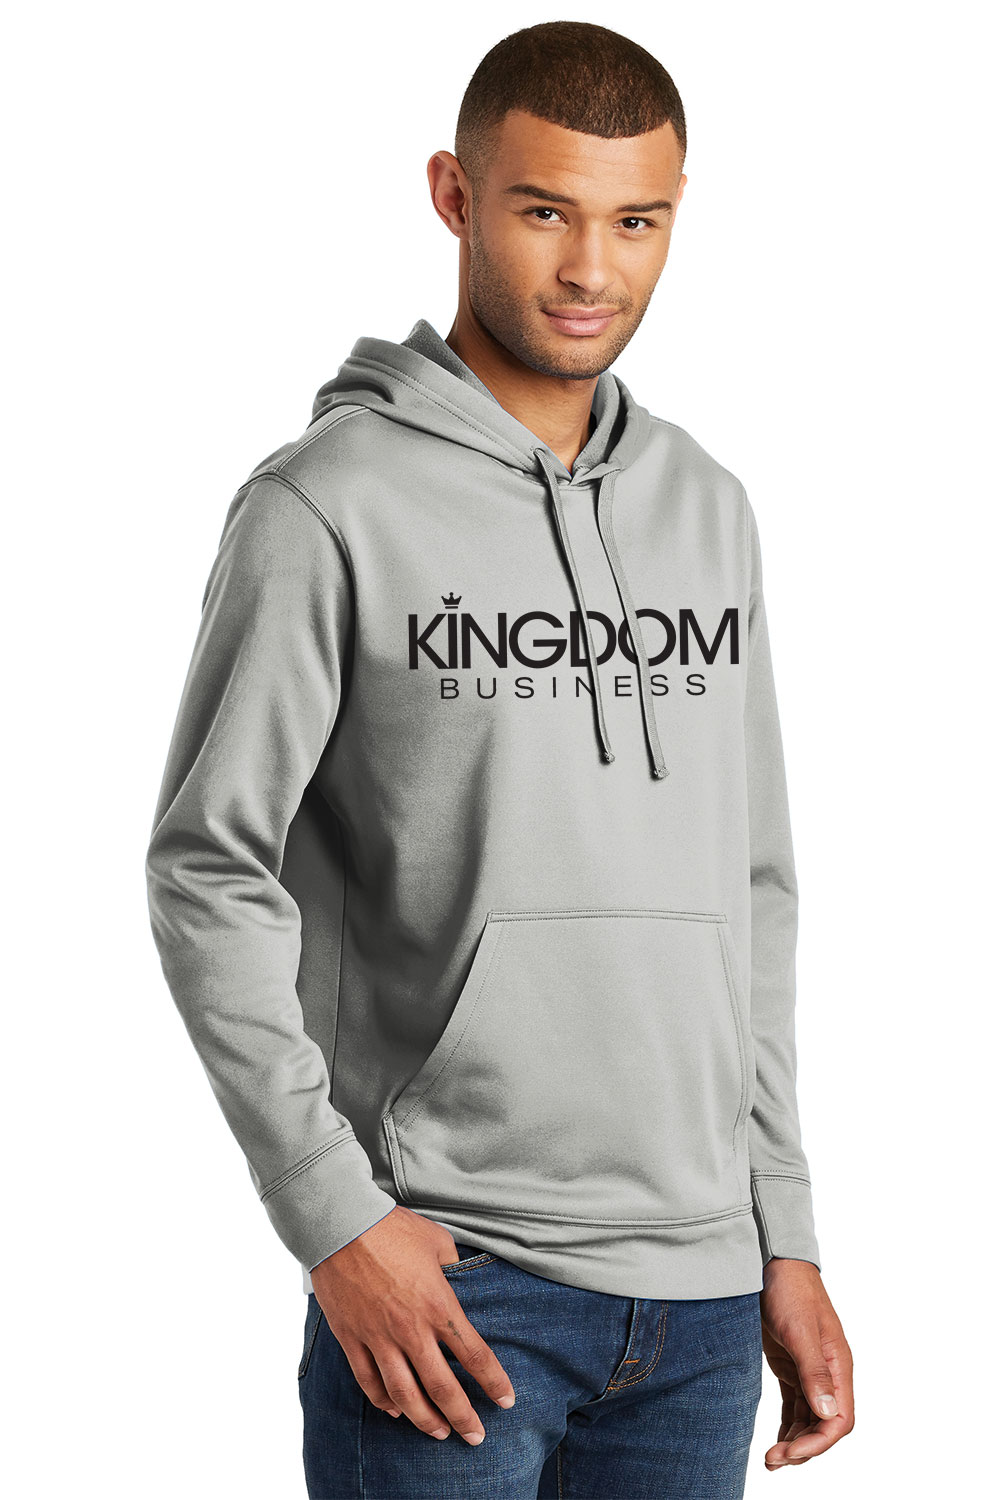 Kingdom Business Performance Fleece Pullover Hooded Sweatshirt - ShooPrints